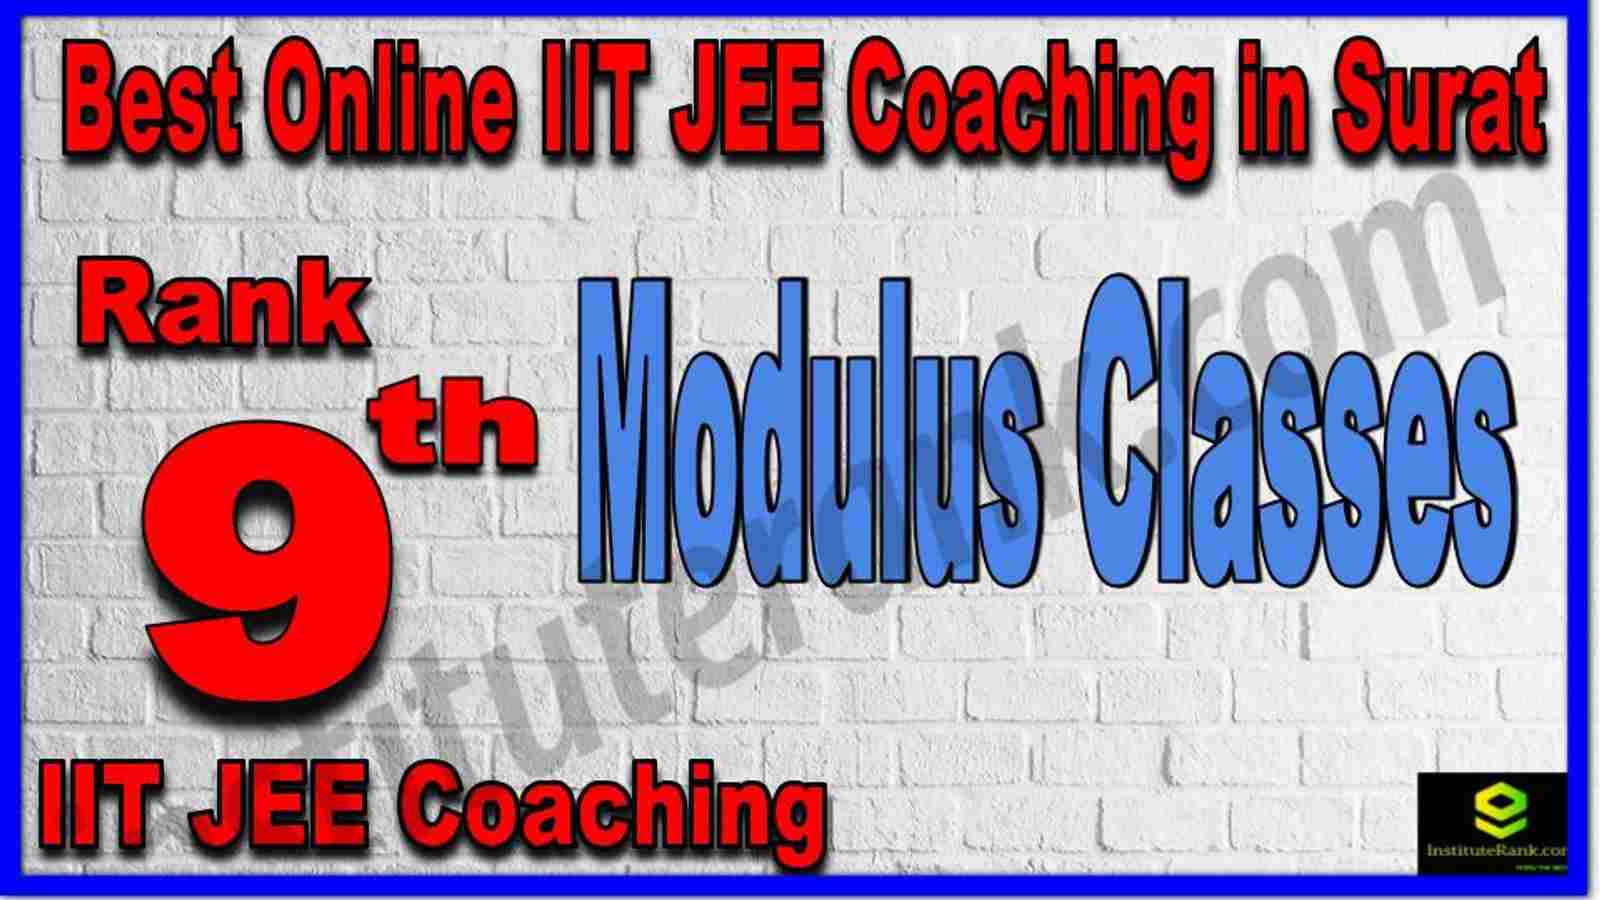 Rank 9th Best Online IIT JEE Coaching in Surat